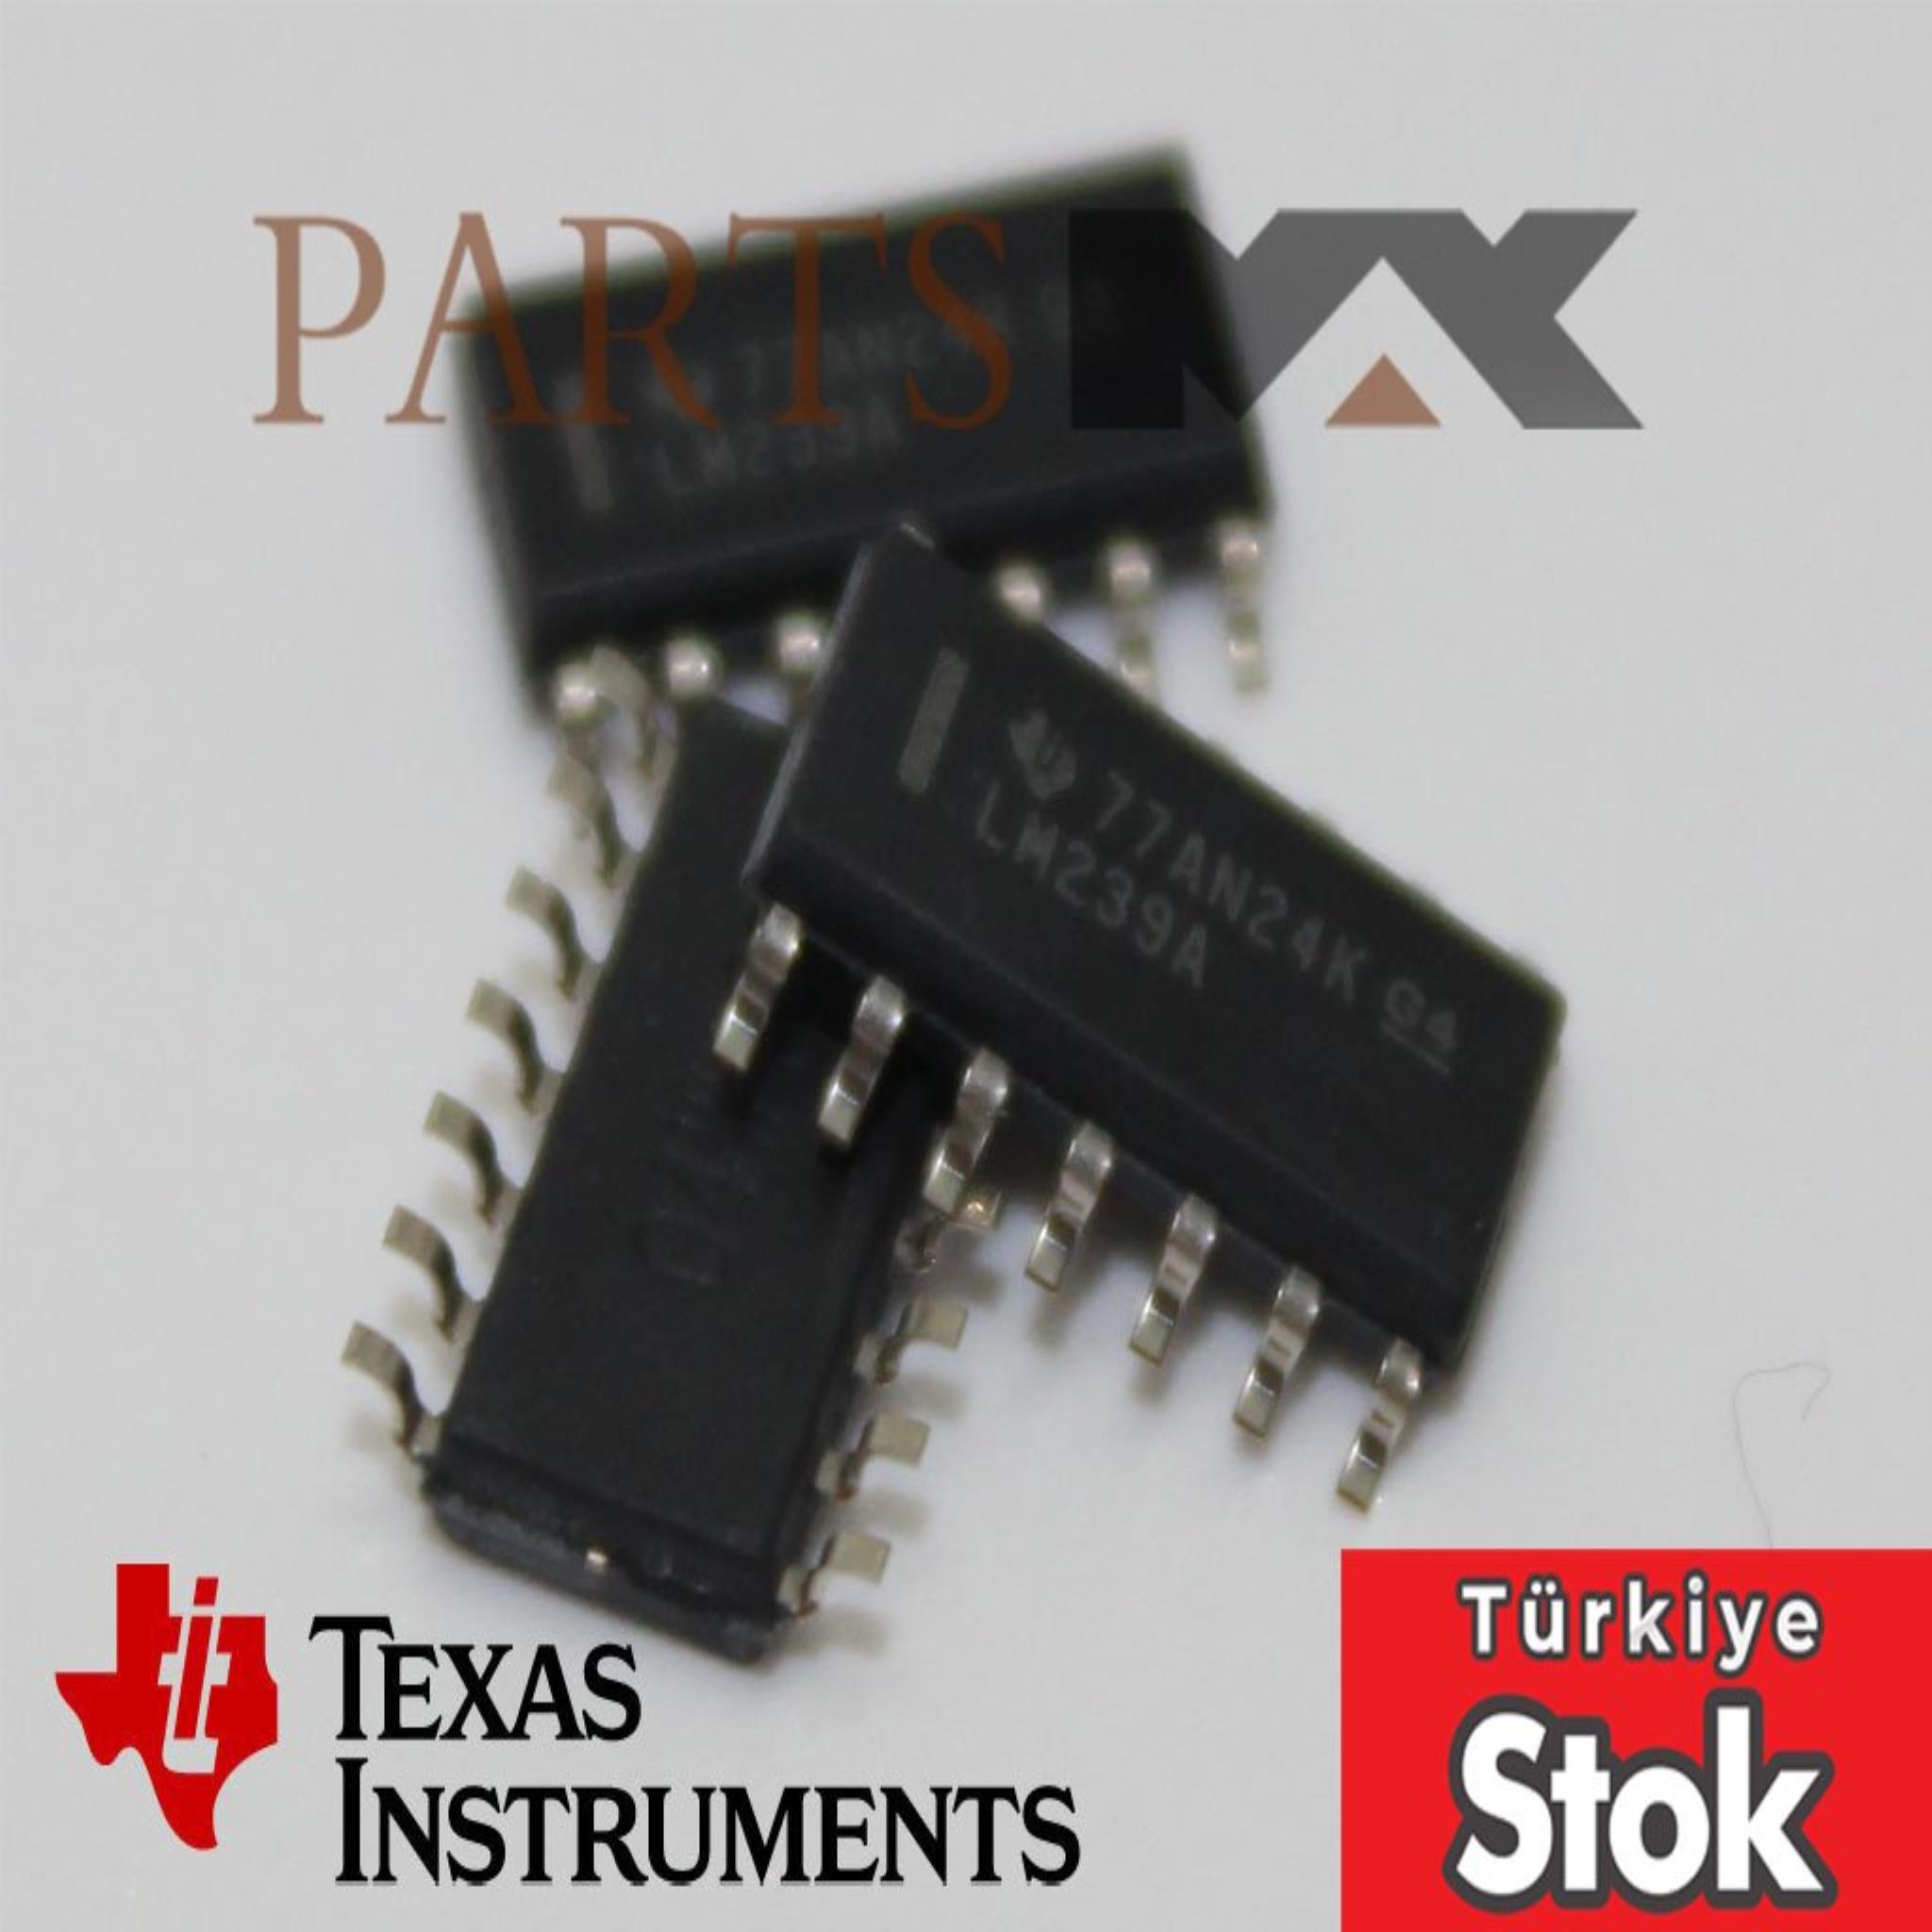 Picture of LM239AD Texas Instruments | Partsmax Türkiye